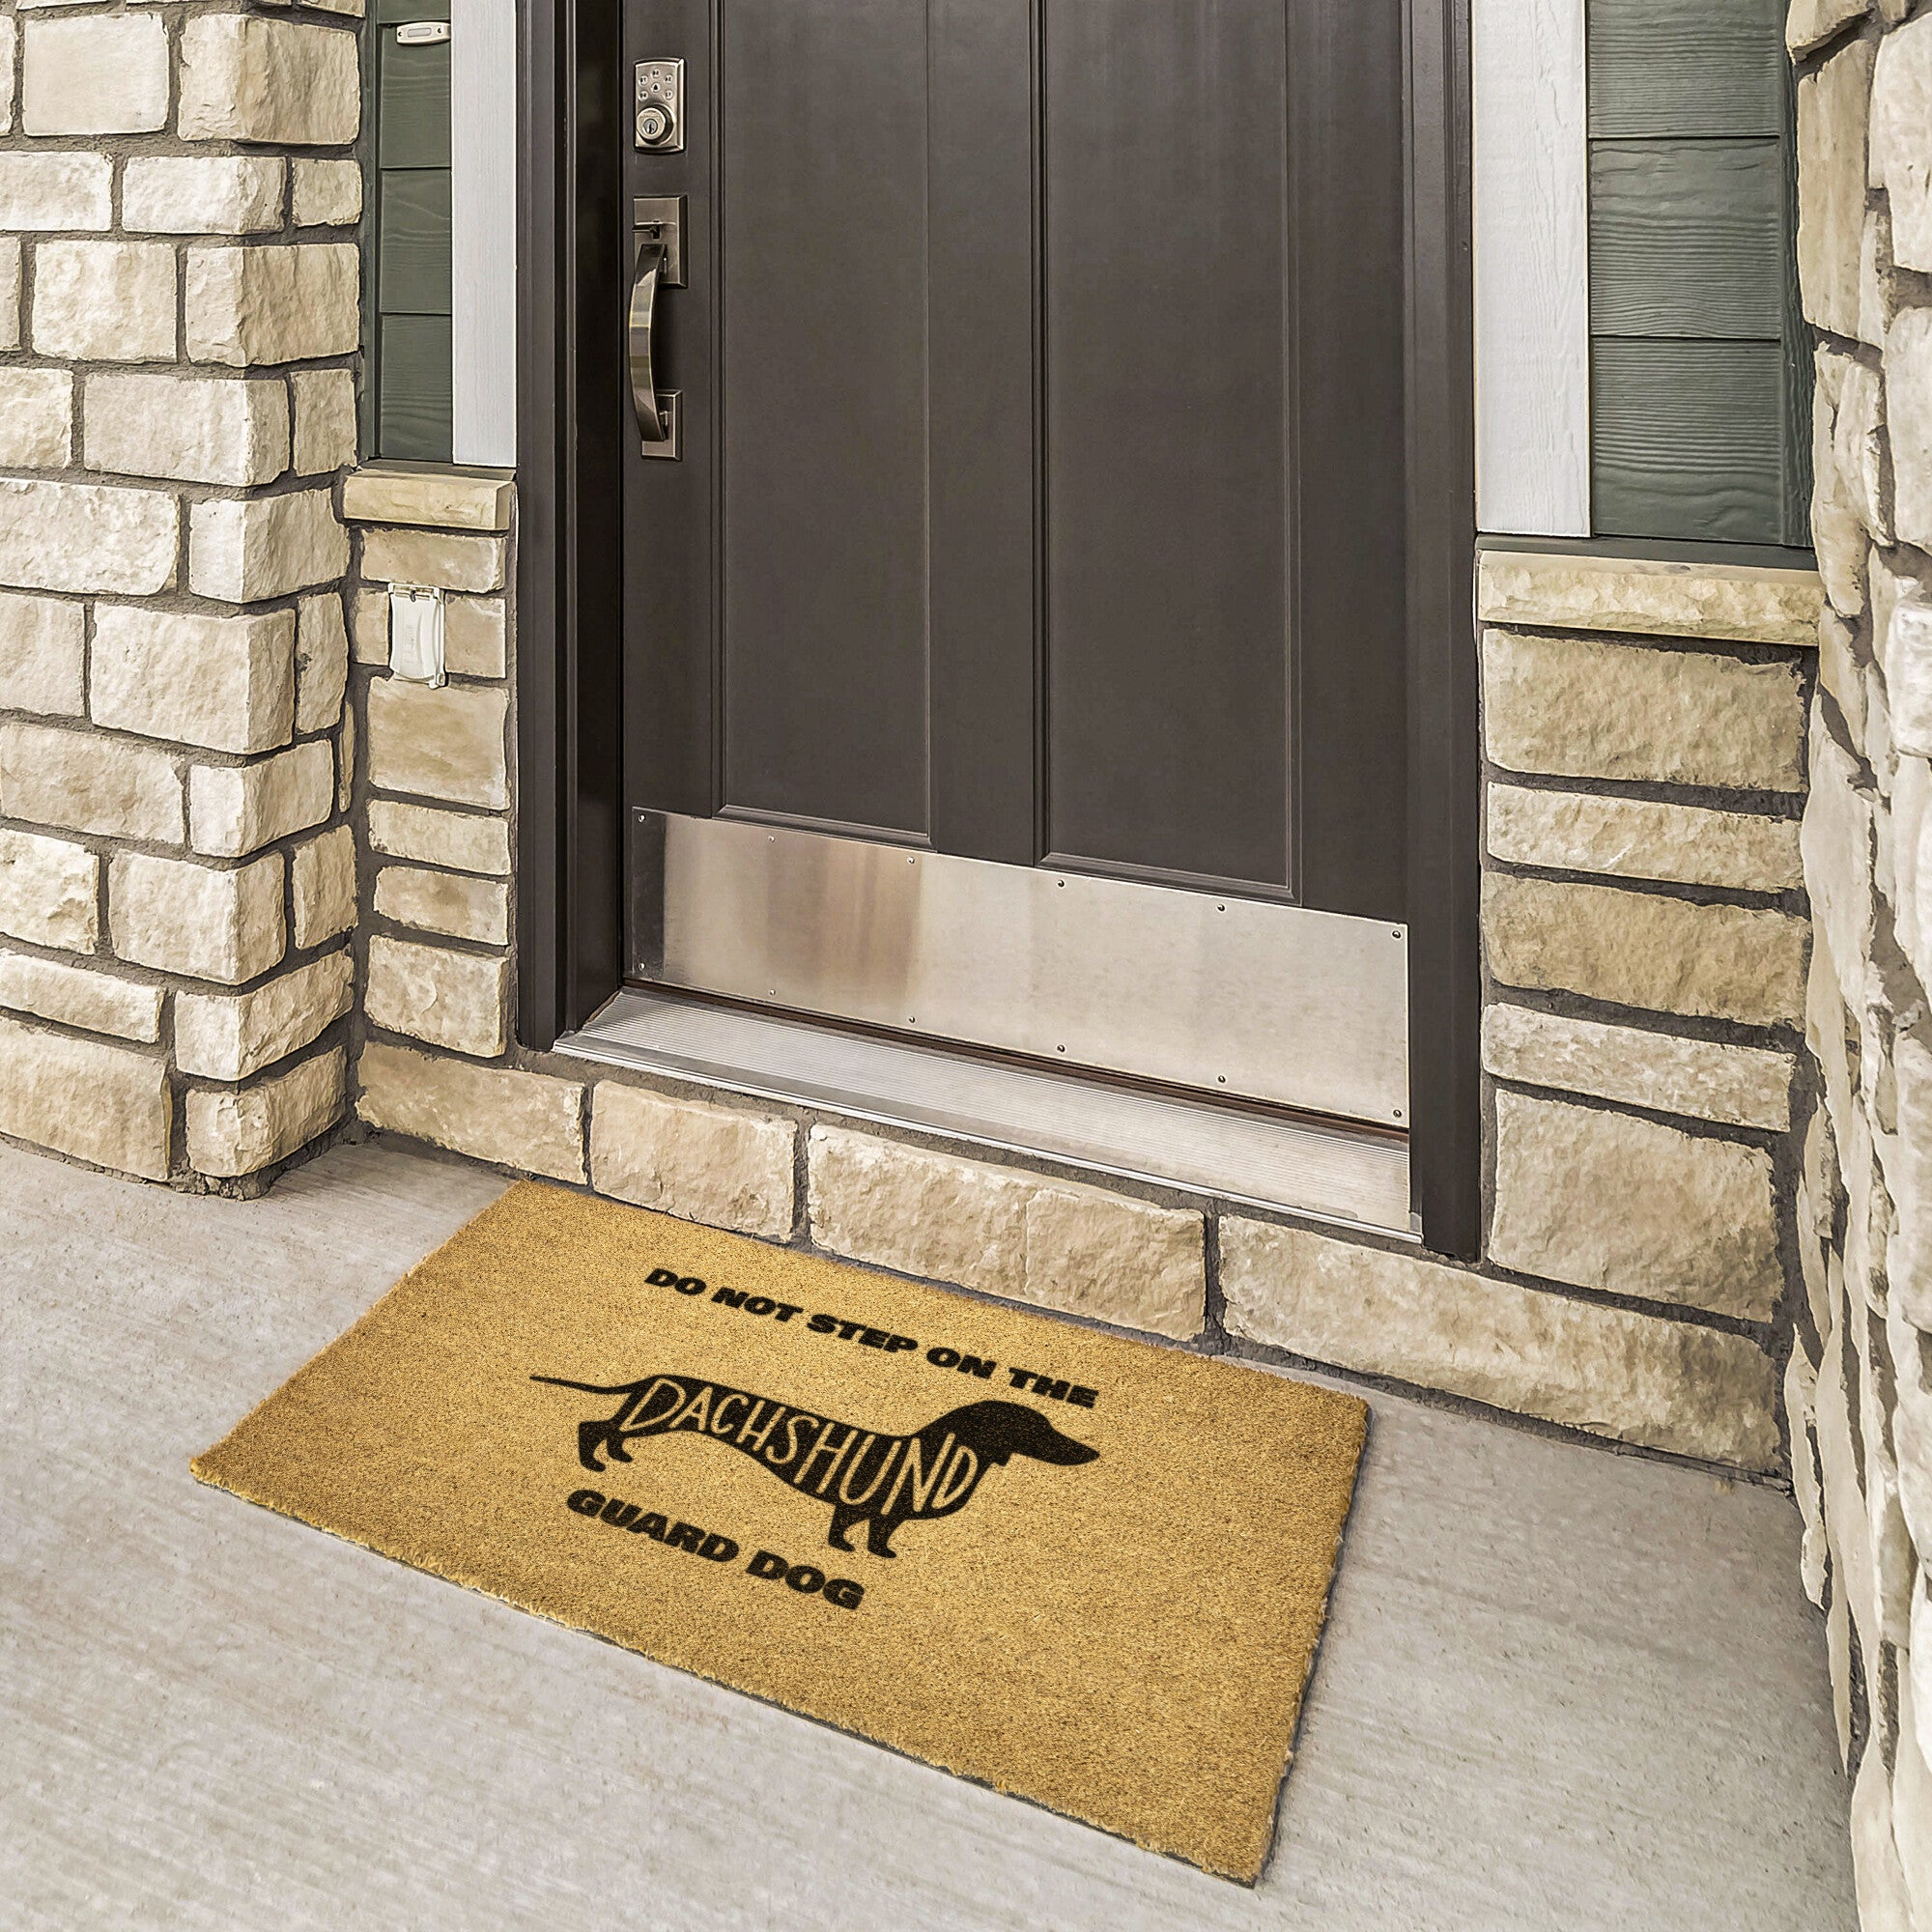 Do not step on the Dachshund guard dog Outdoor Door Mat